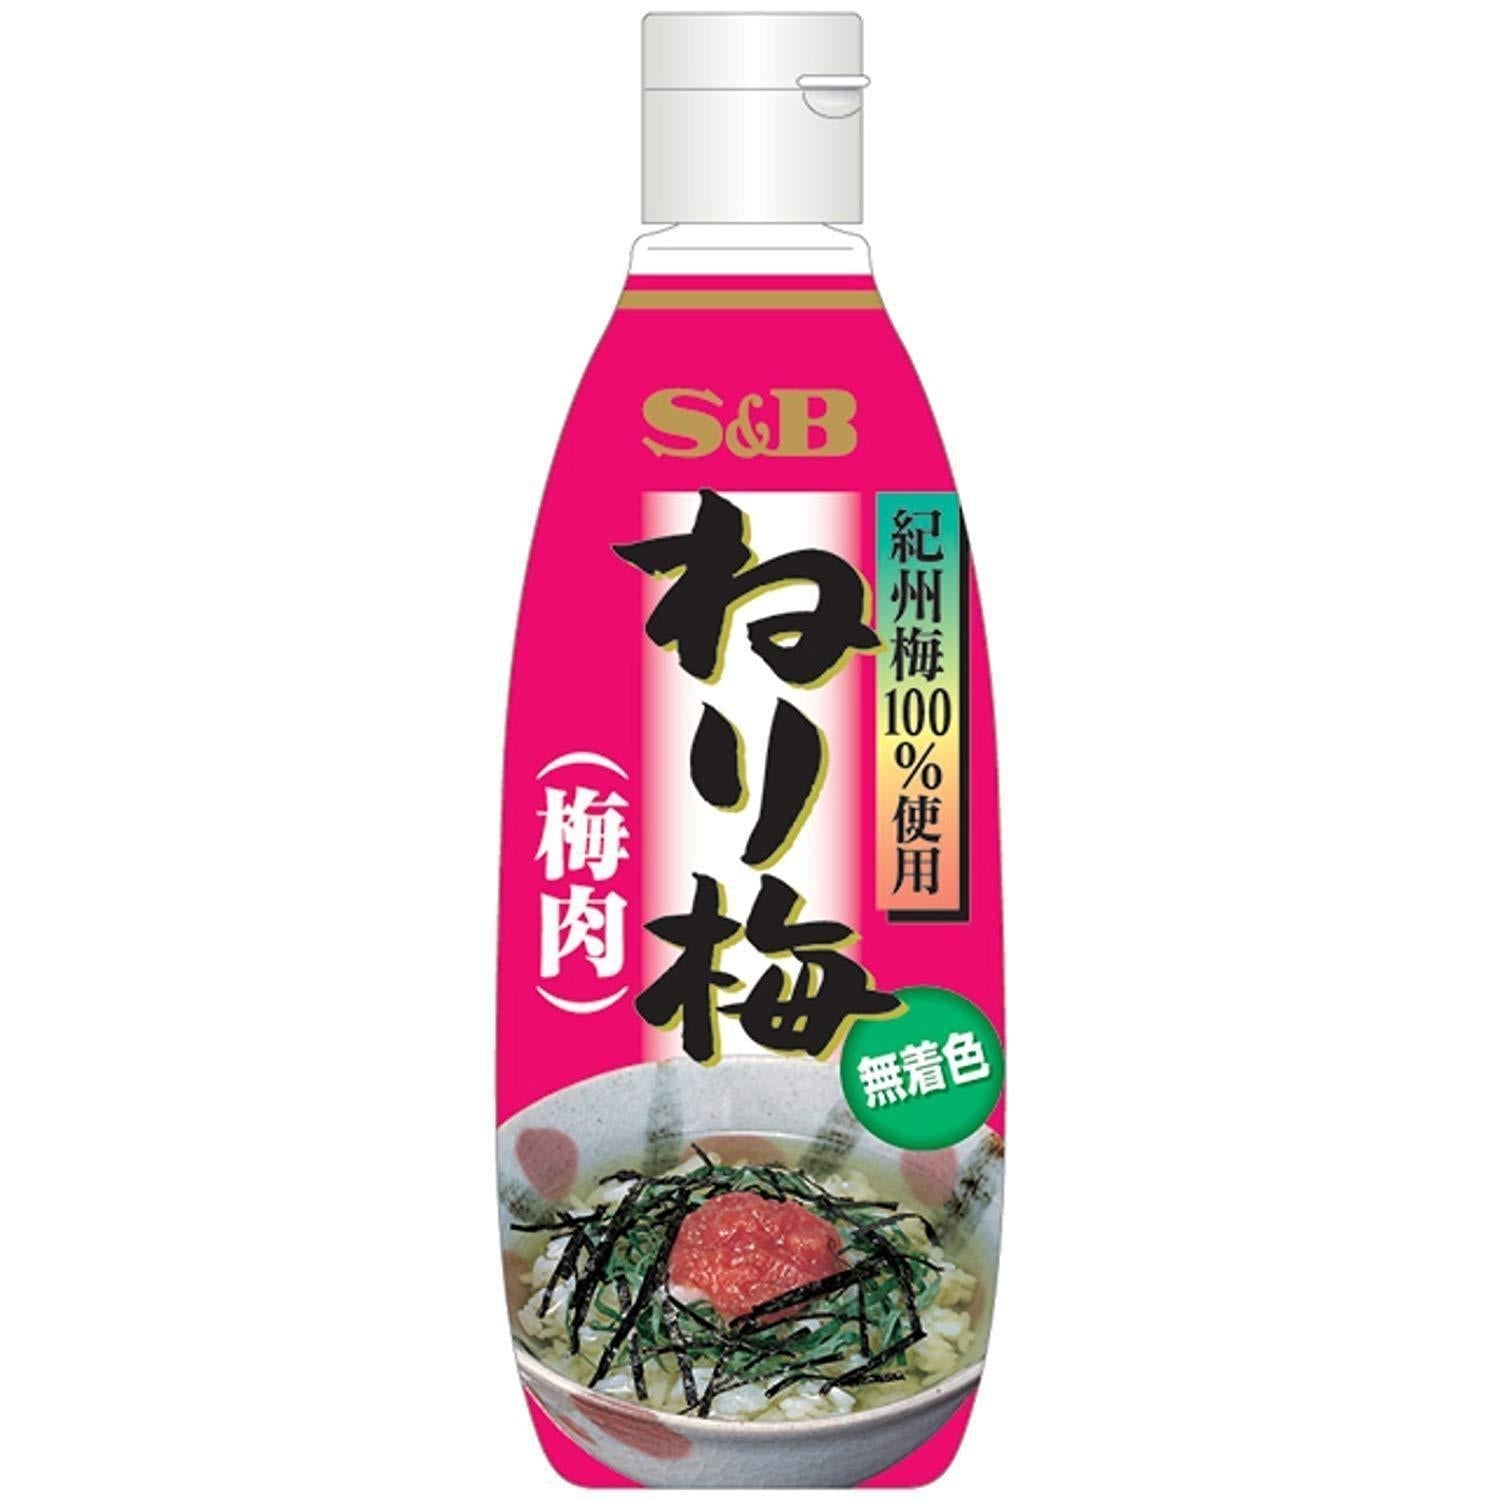 S&B Umeboshi Paste Additive-Free Pickled Plum Paste 310g